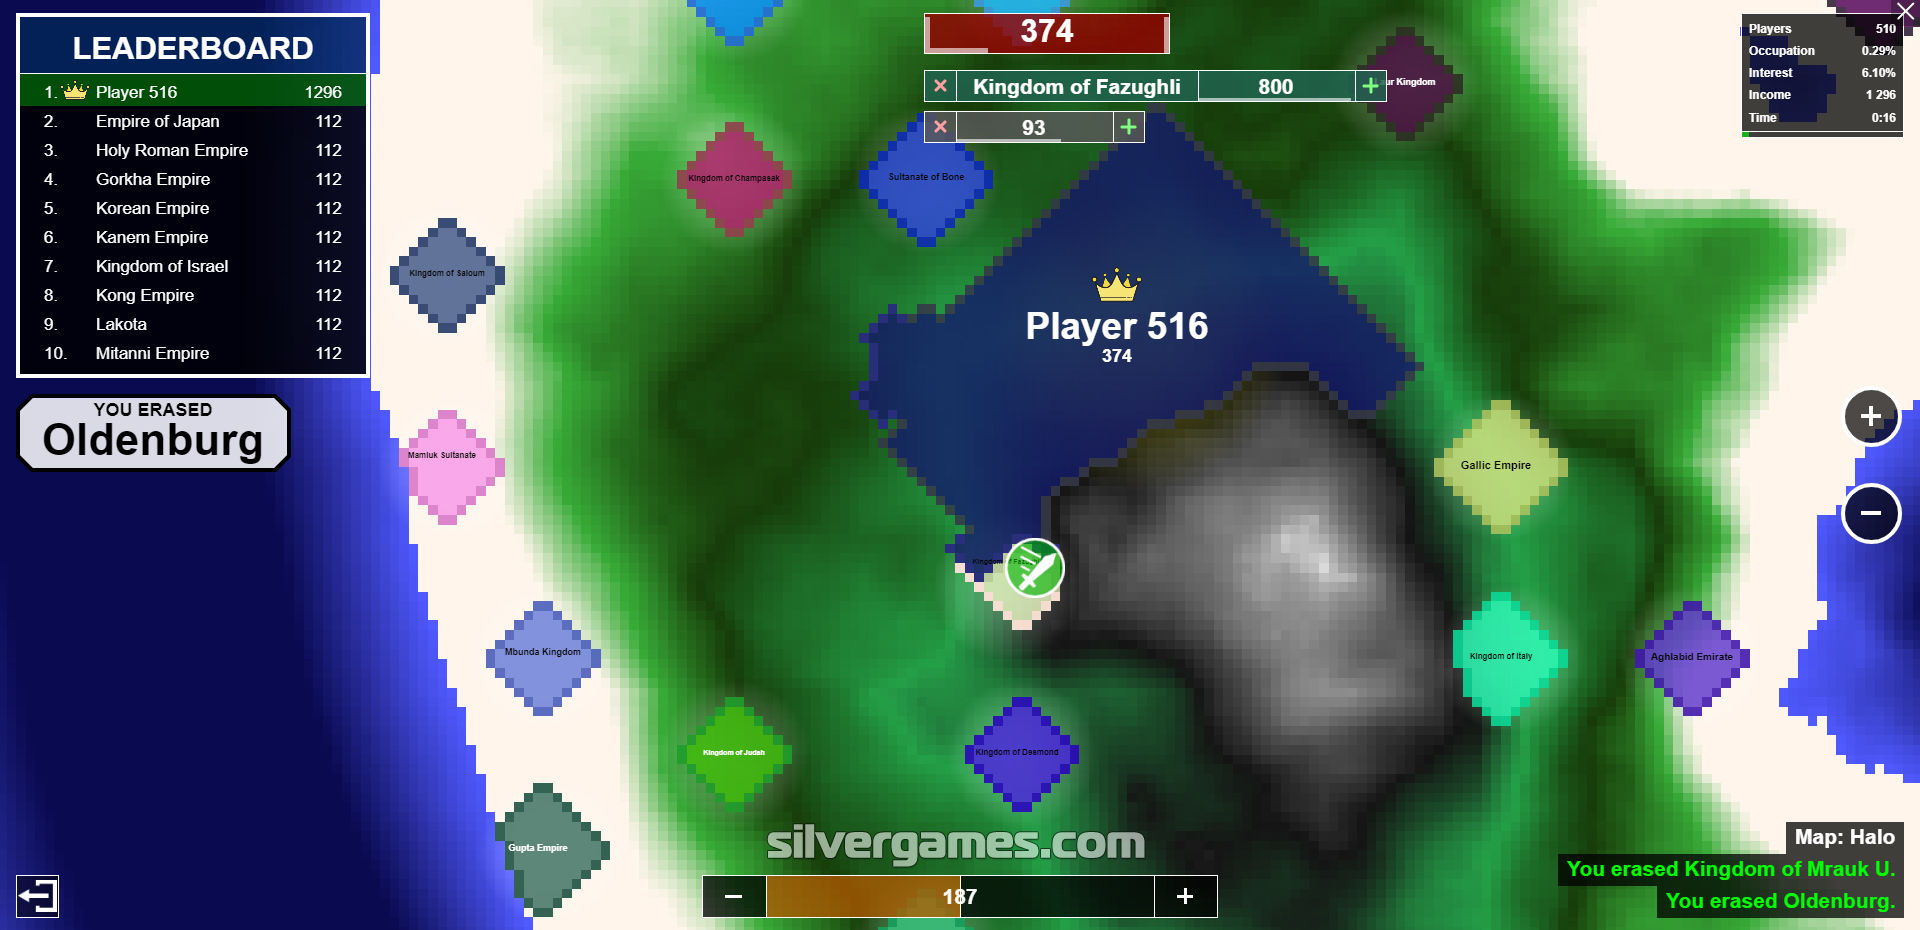 BattleDudes.io - Play Online on SilverGames 🕹️